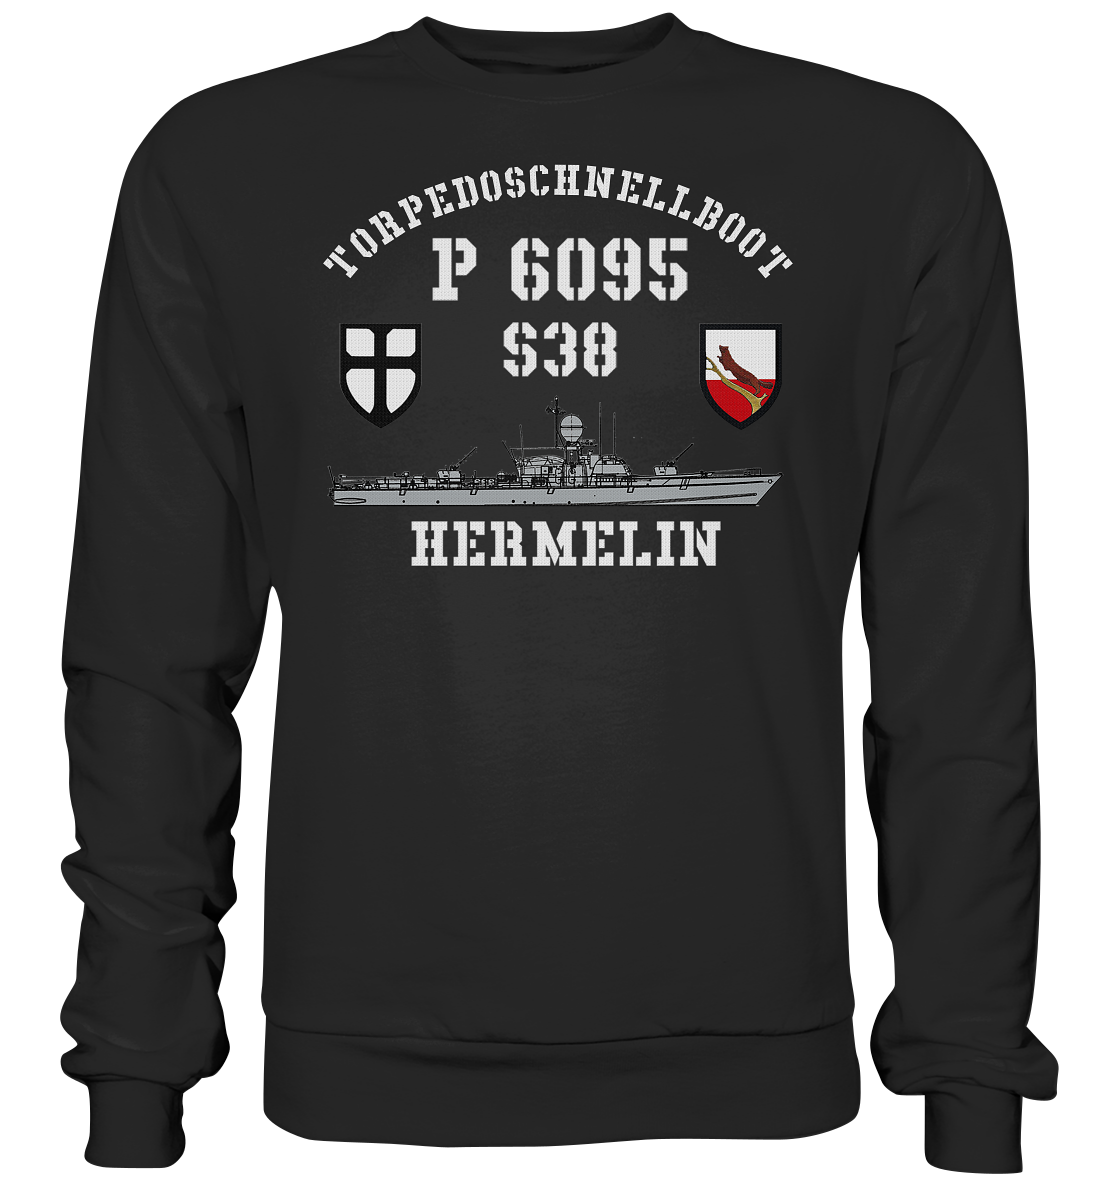 S38 HERMELIN - Premium Sweatshirt